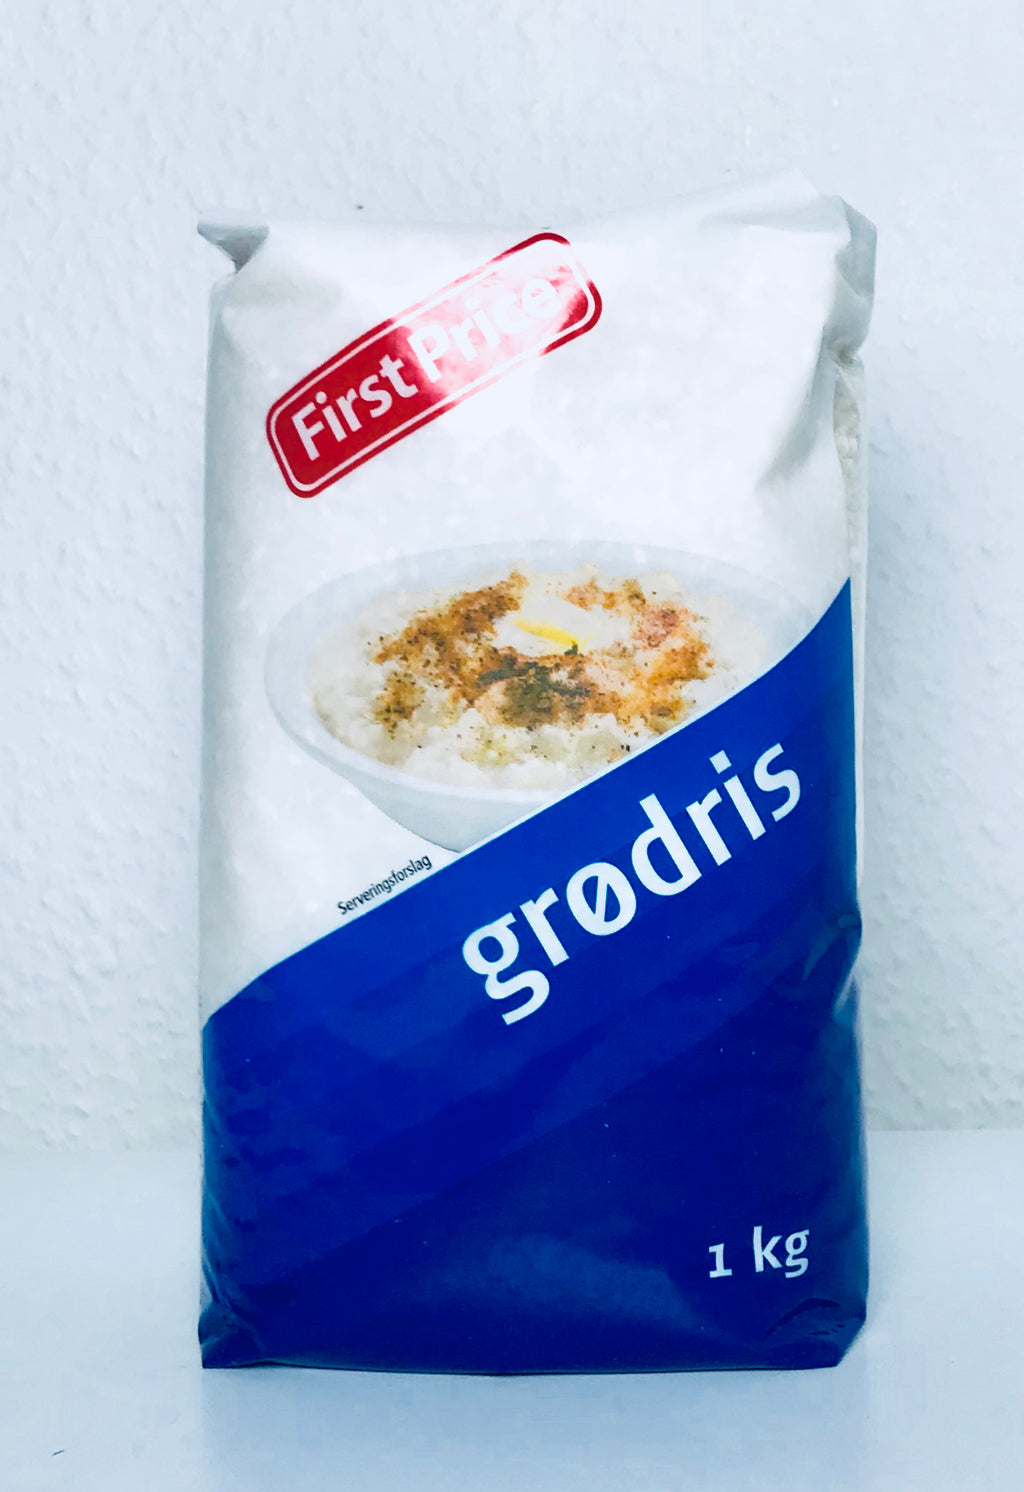 Grødris 1kg - First Price